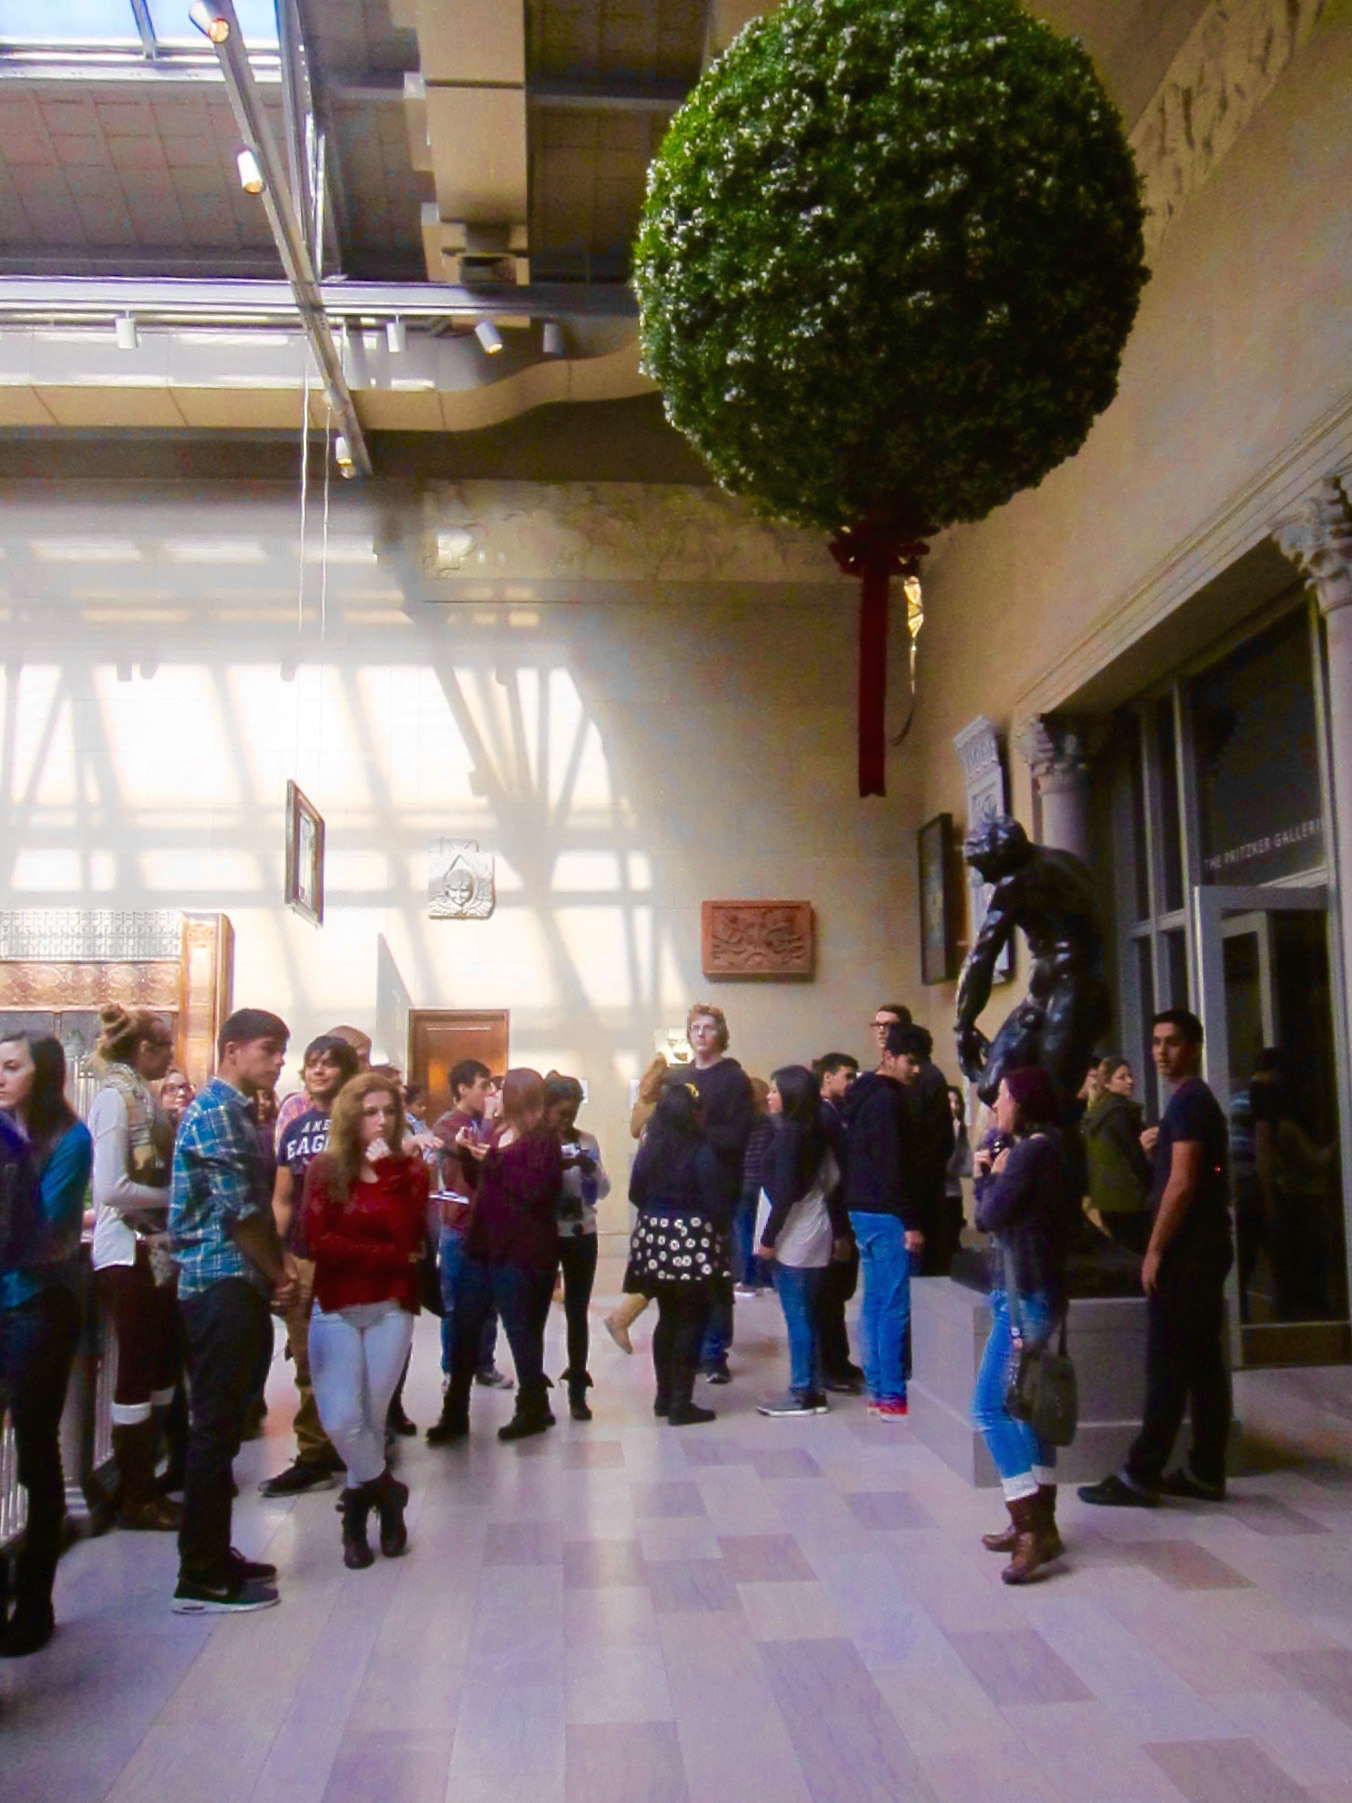 Teens studiously avoiding an enormous mistletoe at a major Chicago museum.